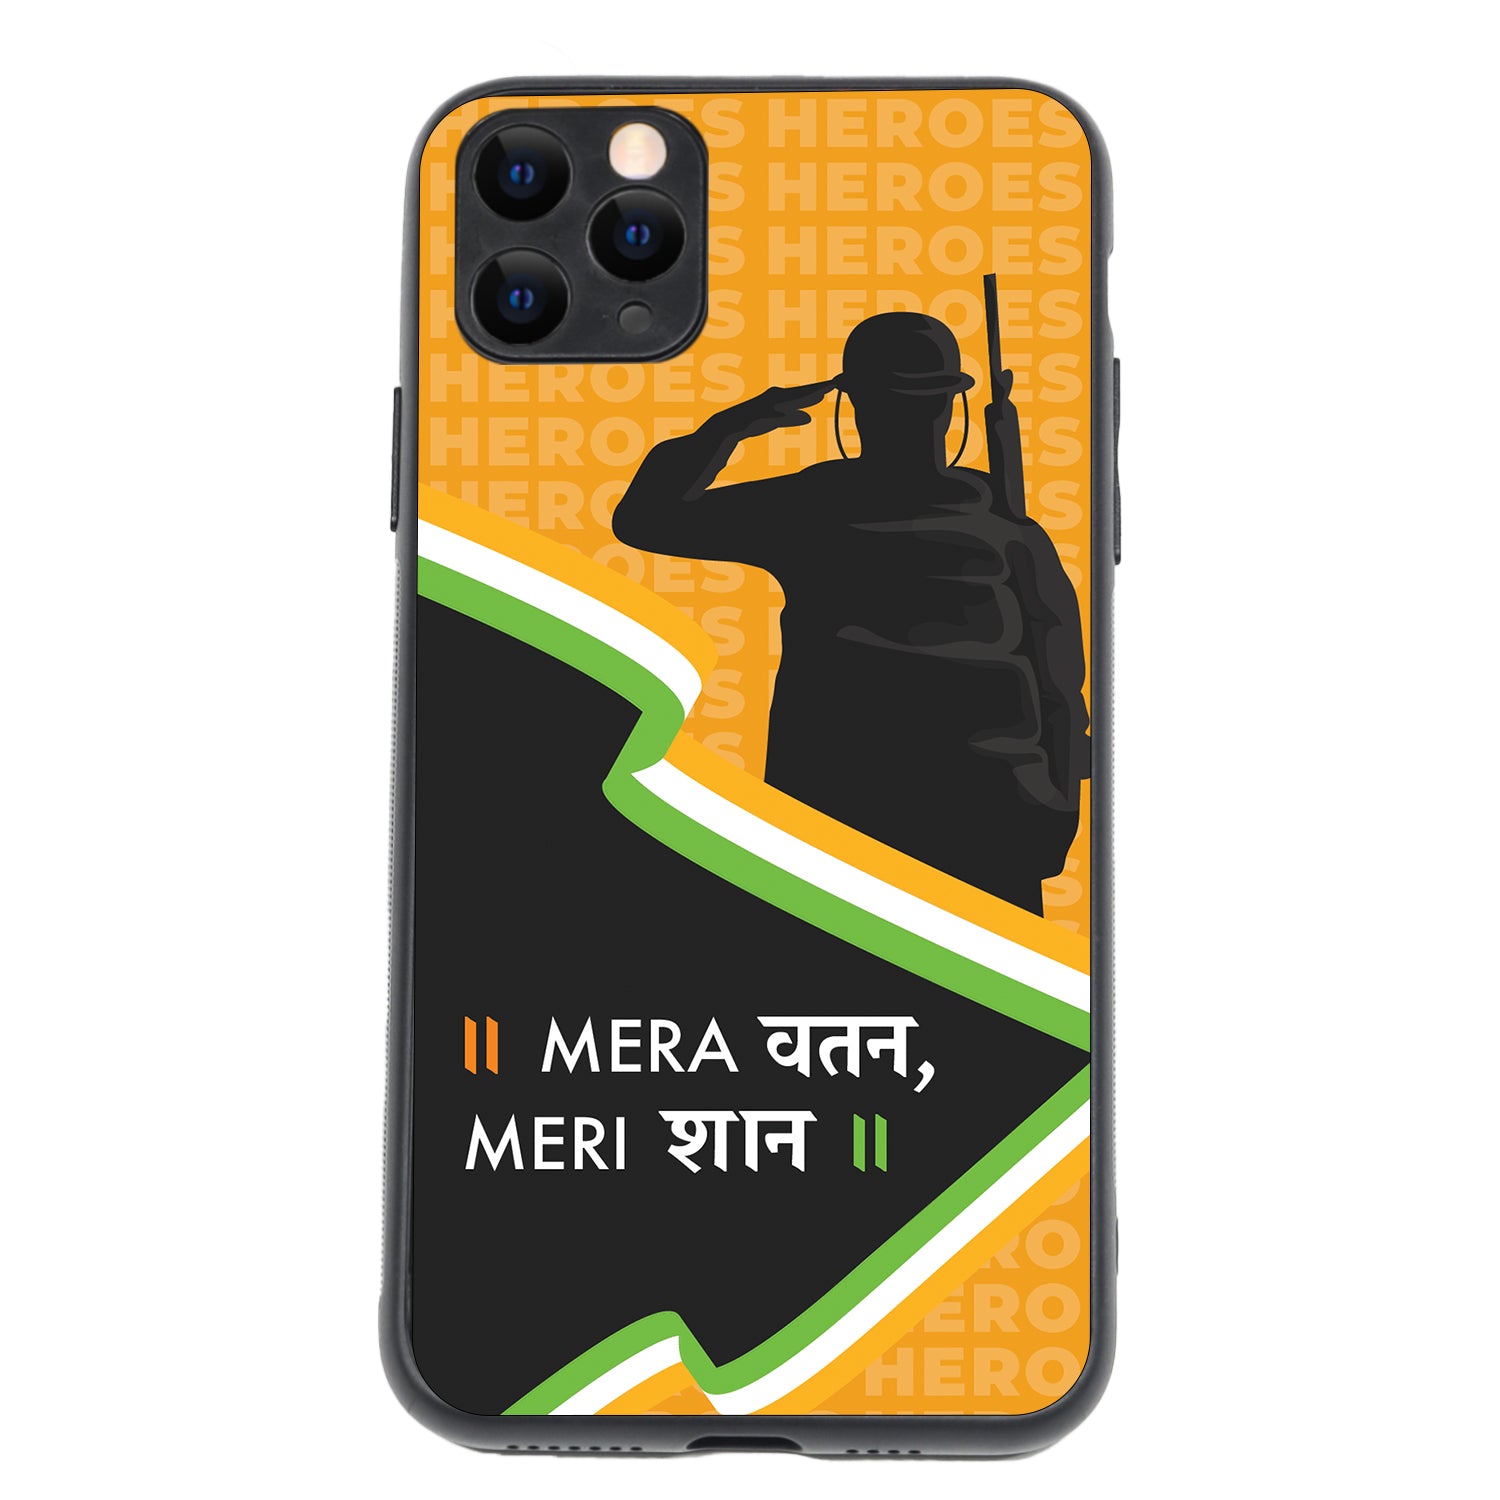 Mere Watan Indian iPhone 11 Pro Max Case